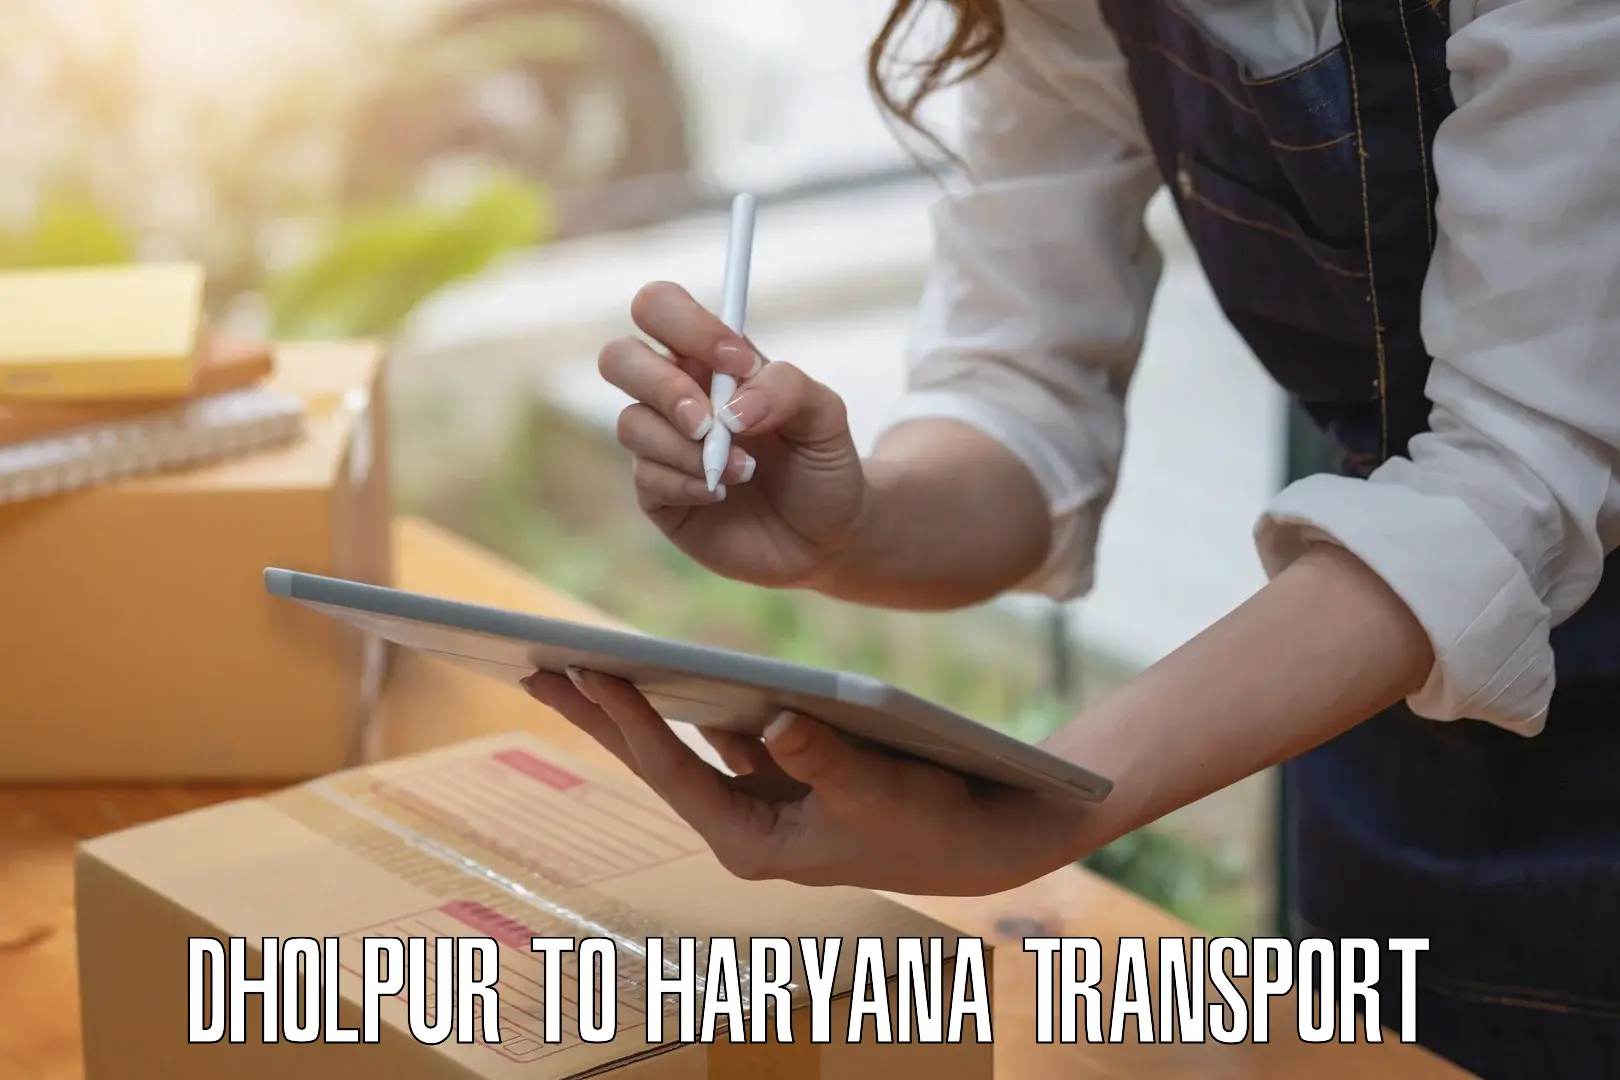 Transport in sharing Dholpur to Bilaspur Haryana